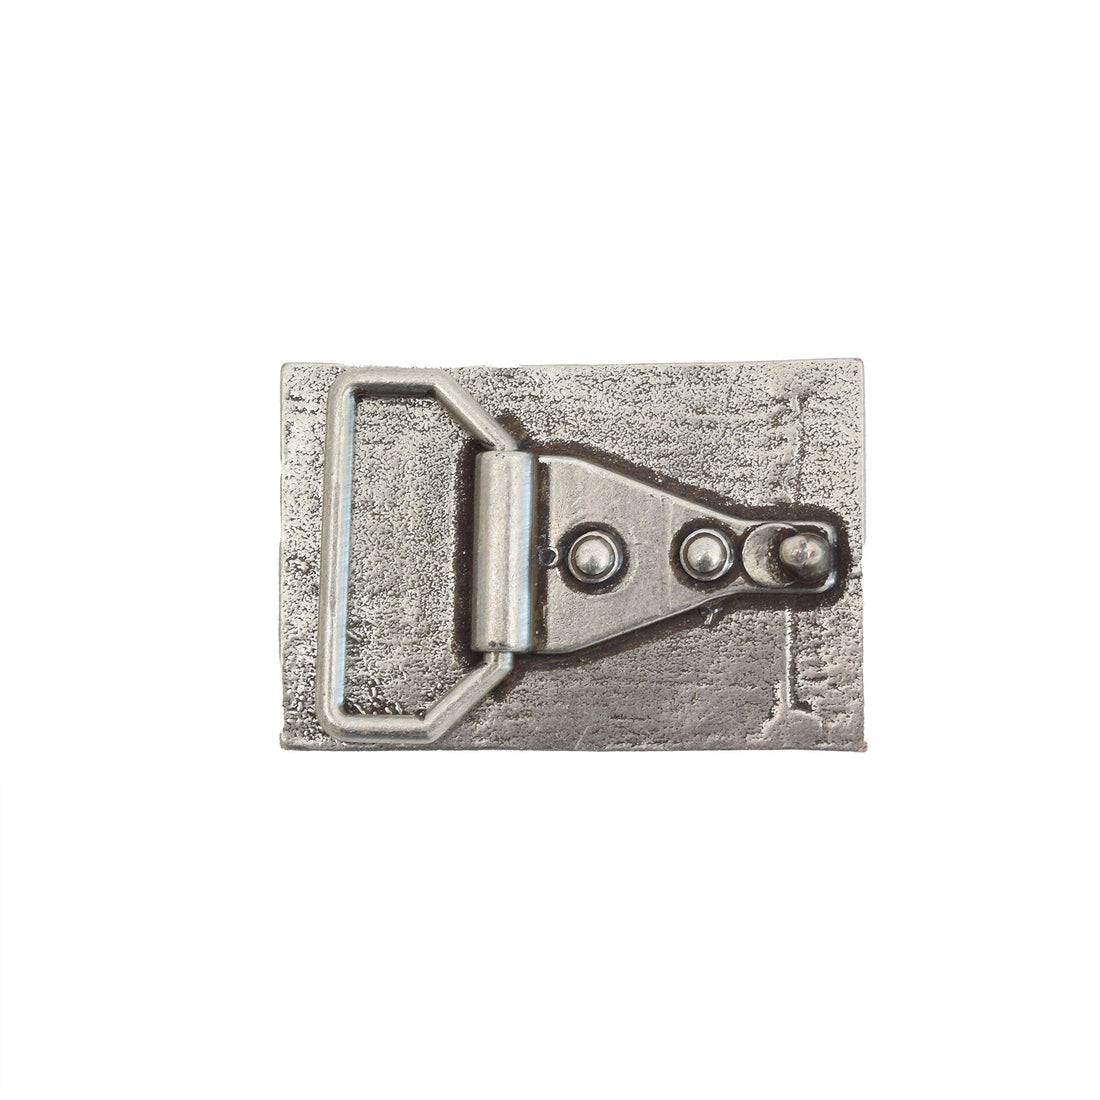 Cato Silver Toned Removable Metal Belt Buckle - Buckles Zengoda Shop online from Artisan Brands